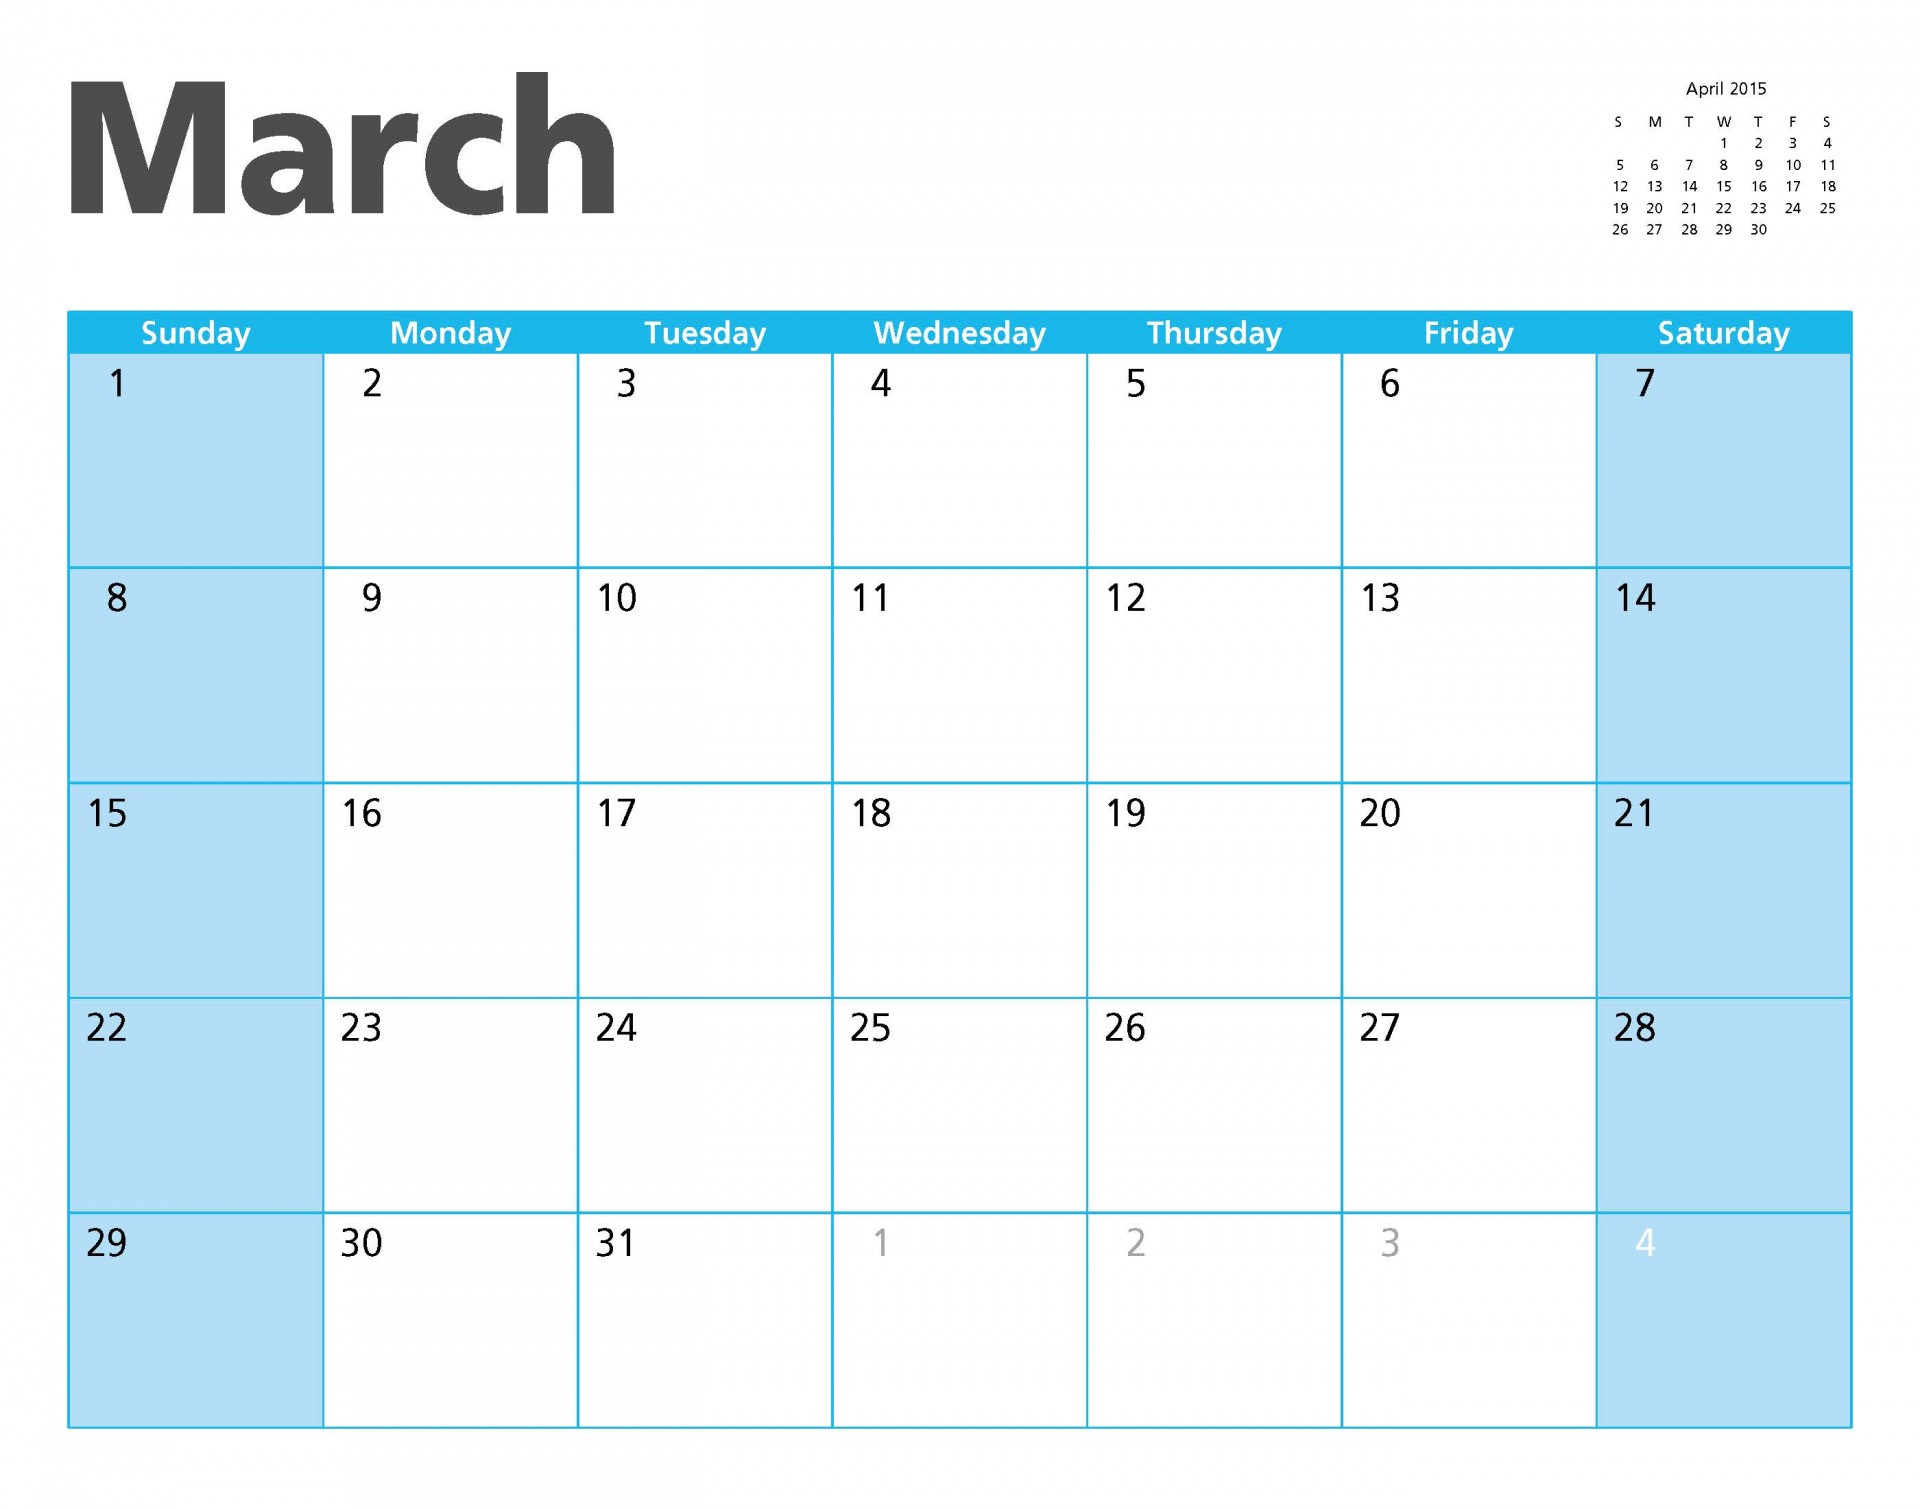 Mars 2015 kalender sidan